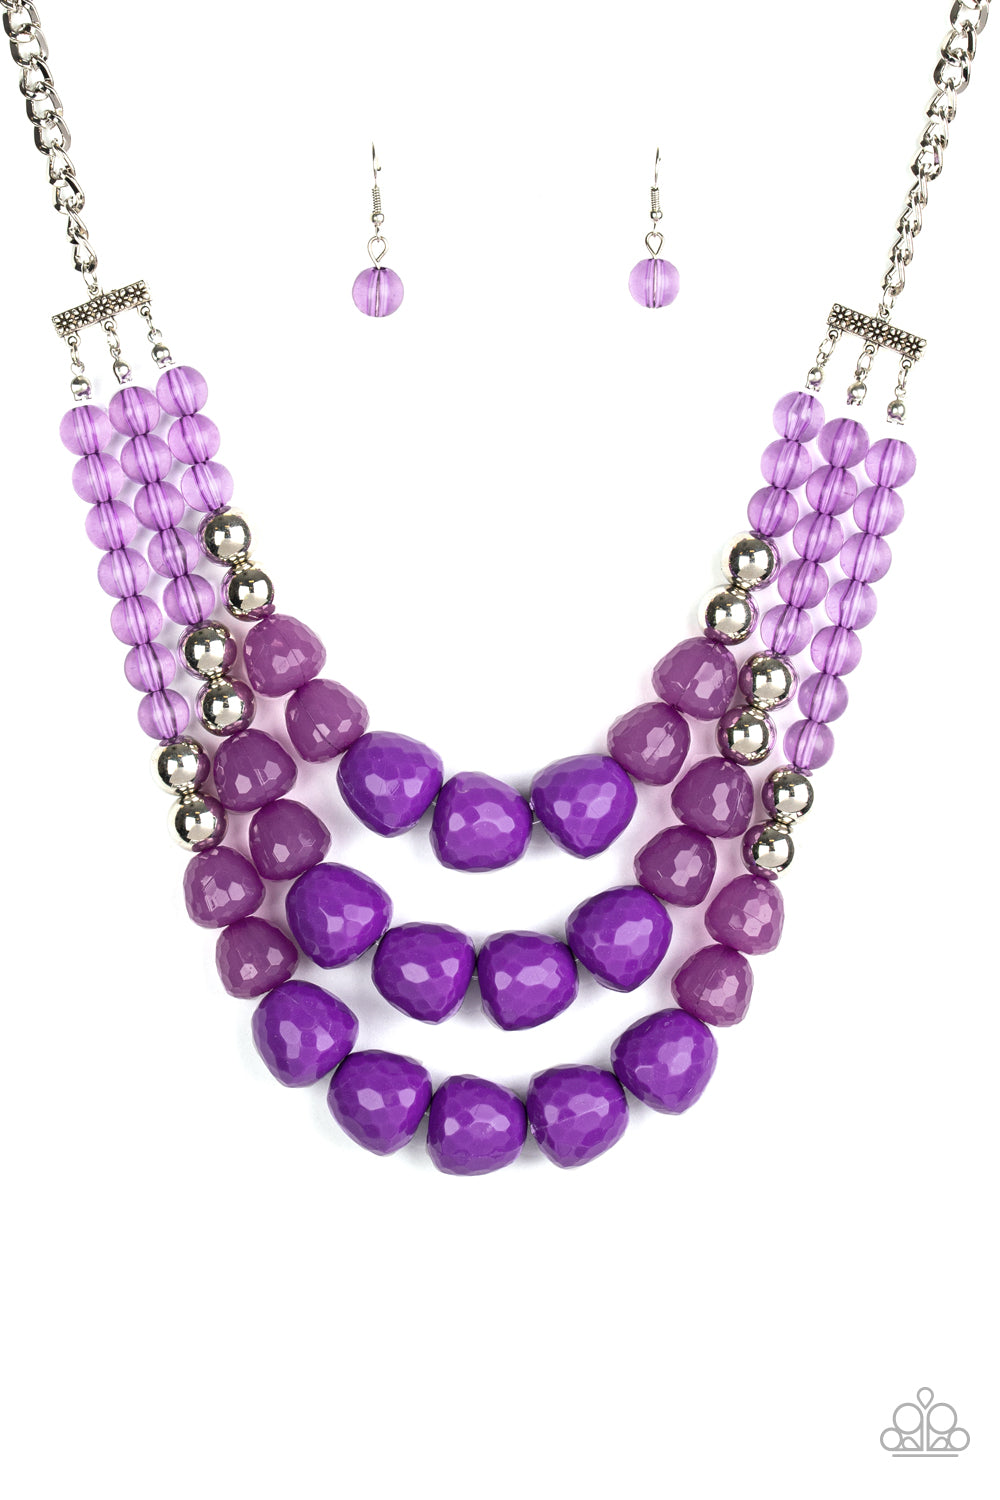 Forbidden Fruit - Purple necklace